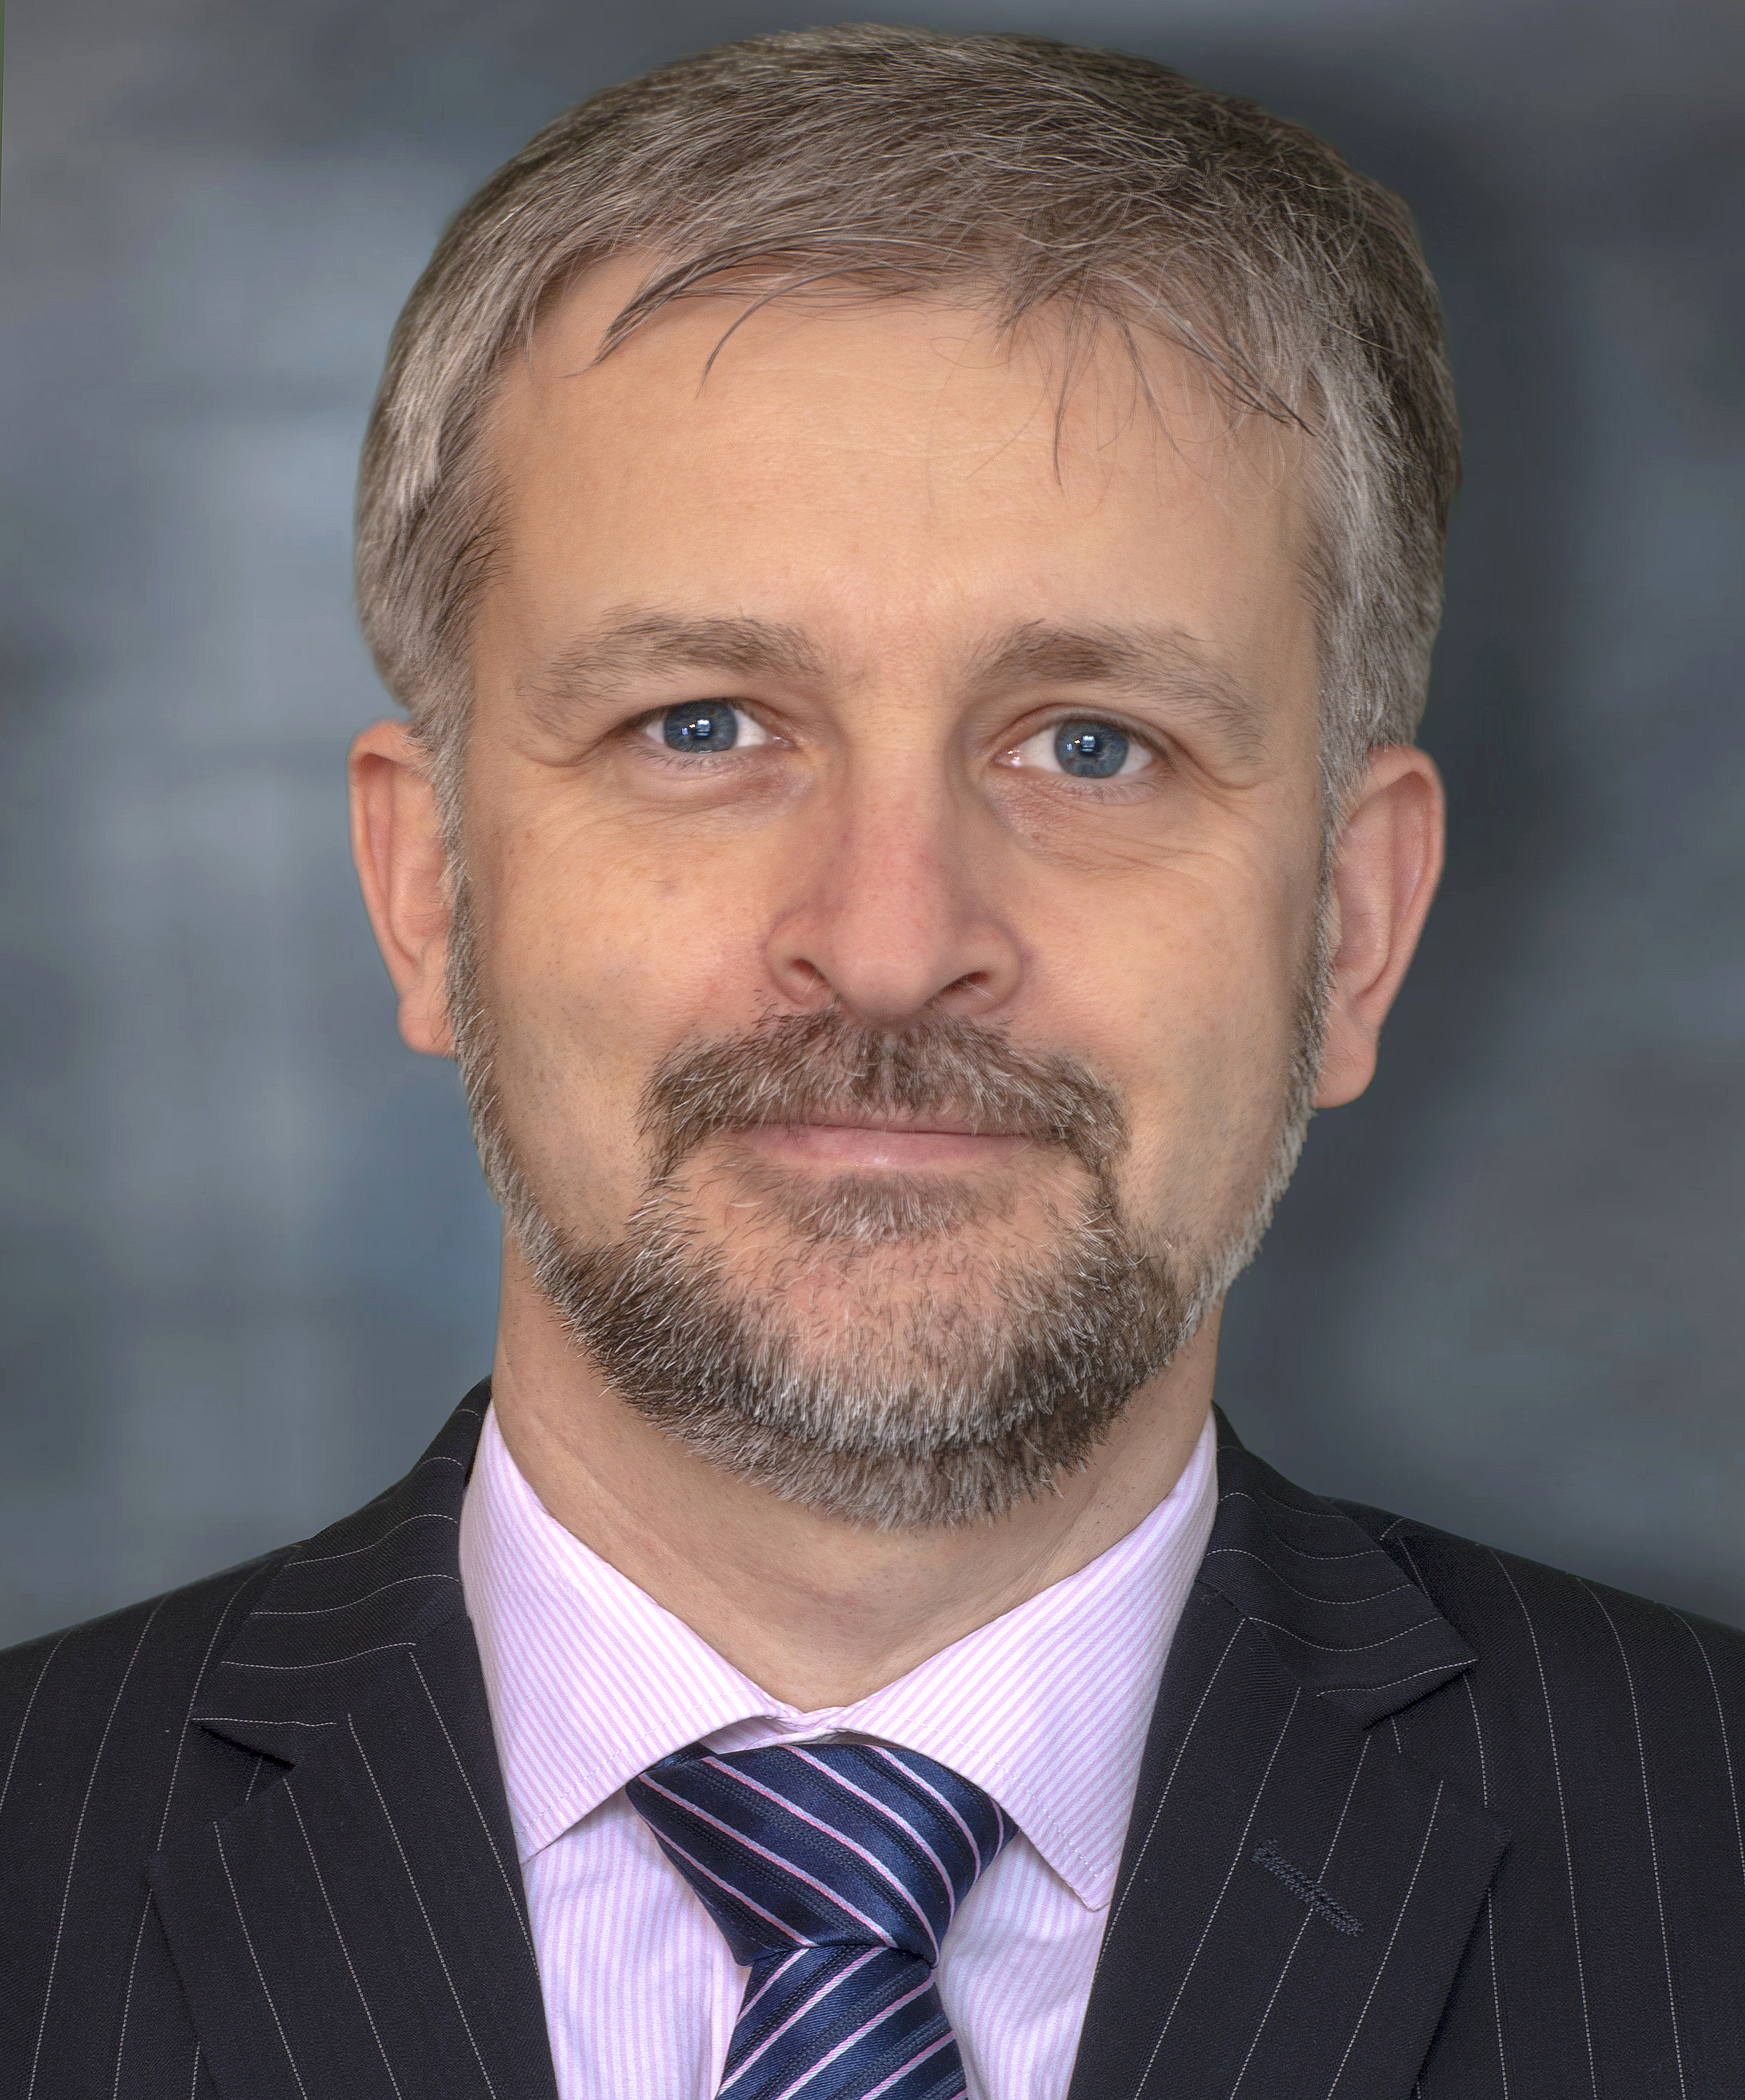 Mr Marcel Ivanov, Consultant Neurosurgeon and Spinal Surgeon